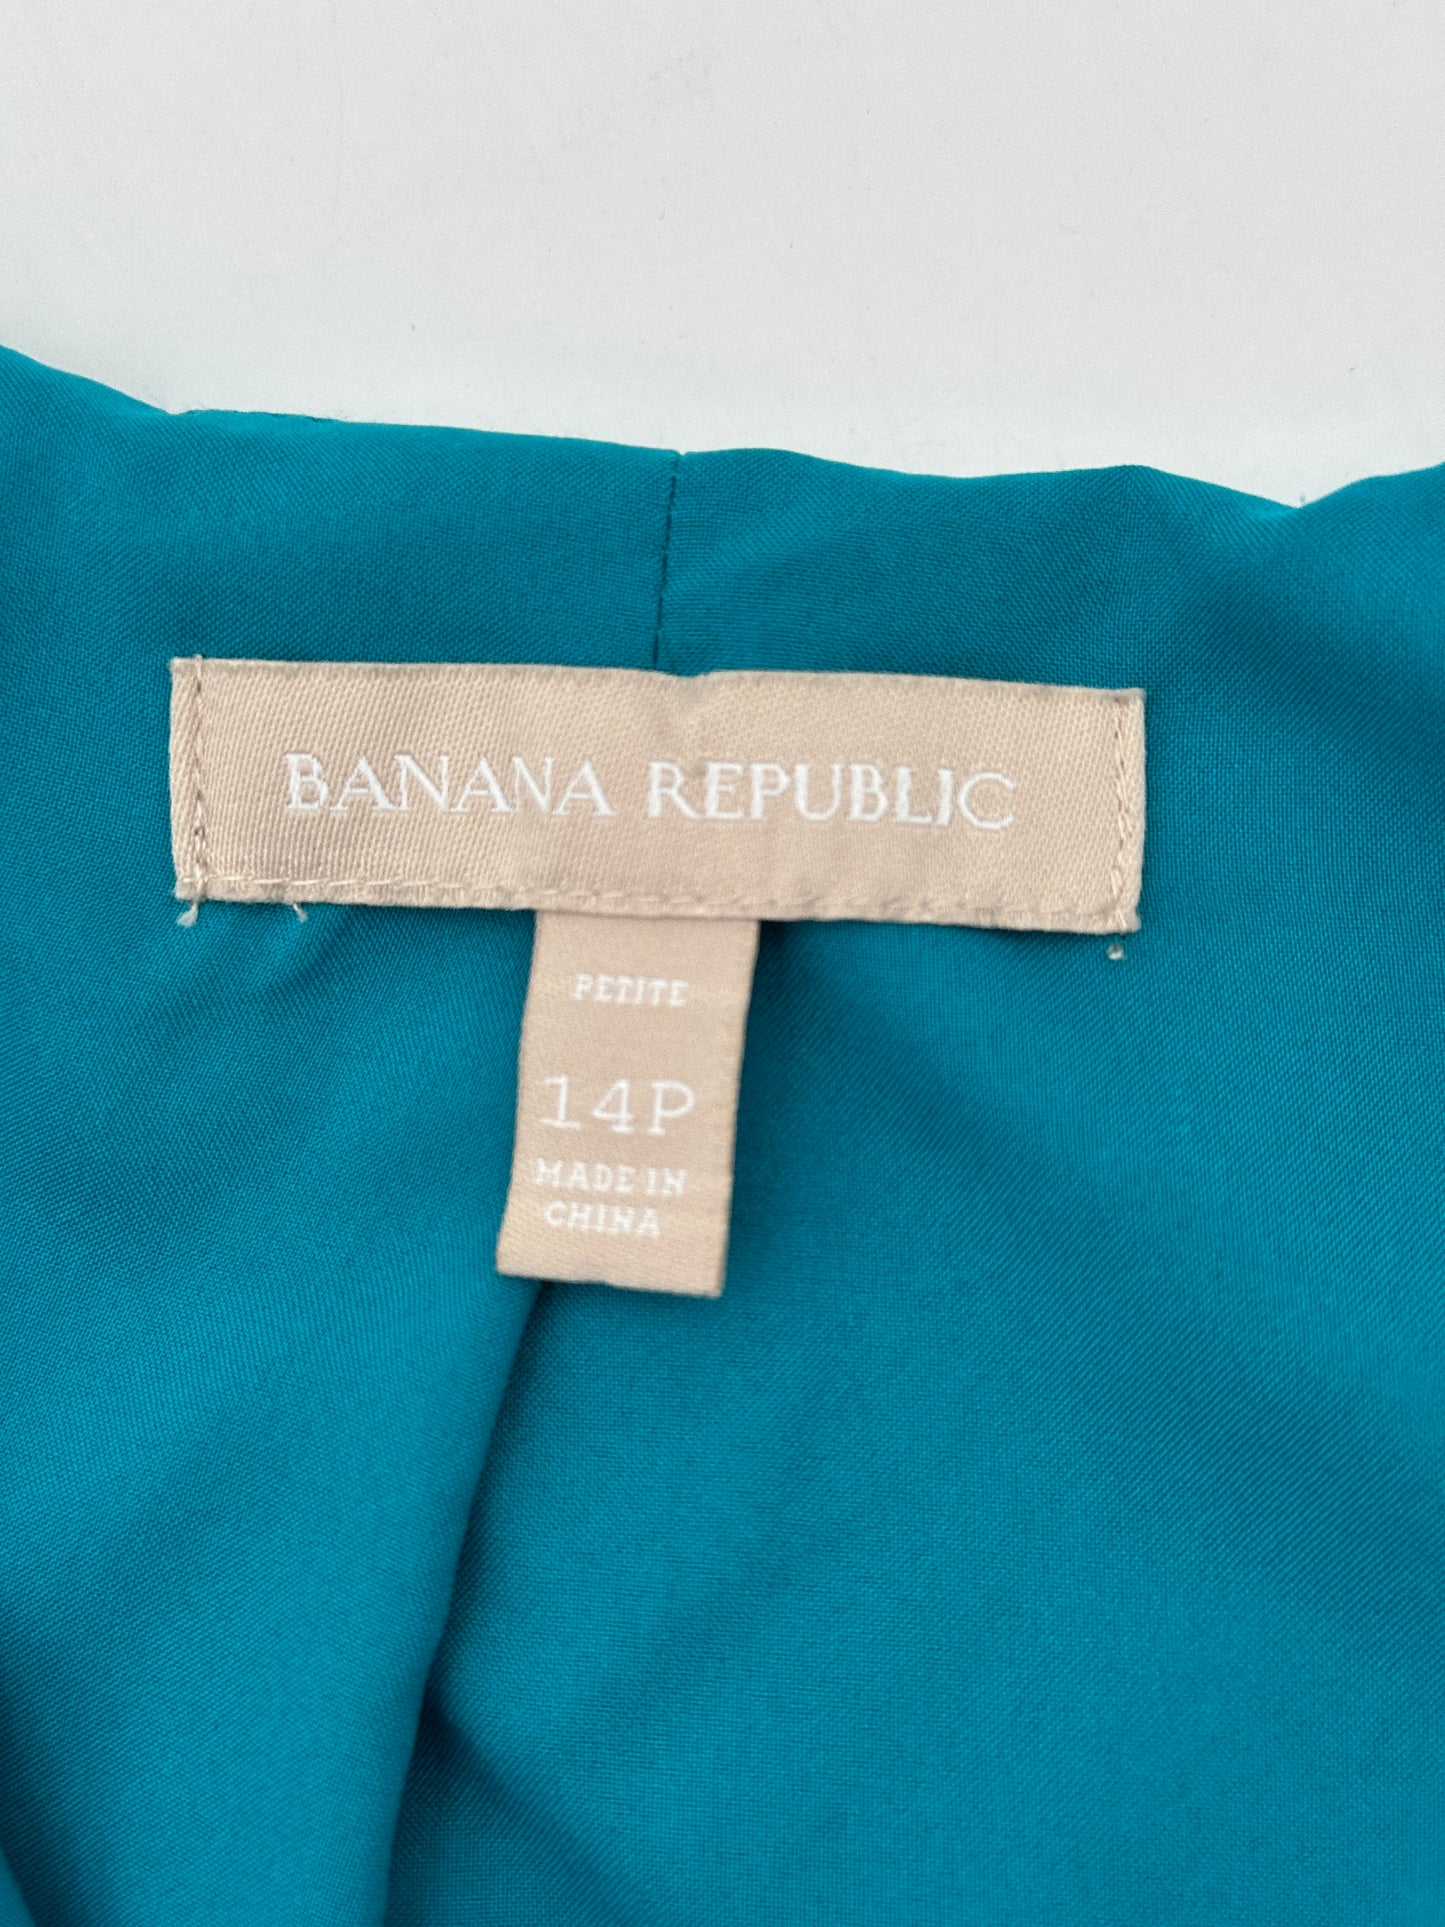 Banana Republic Size 14P Teal Sleeveless Shift Dress Sundress